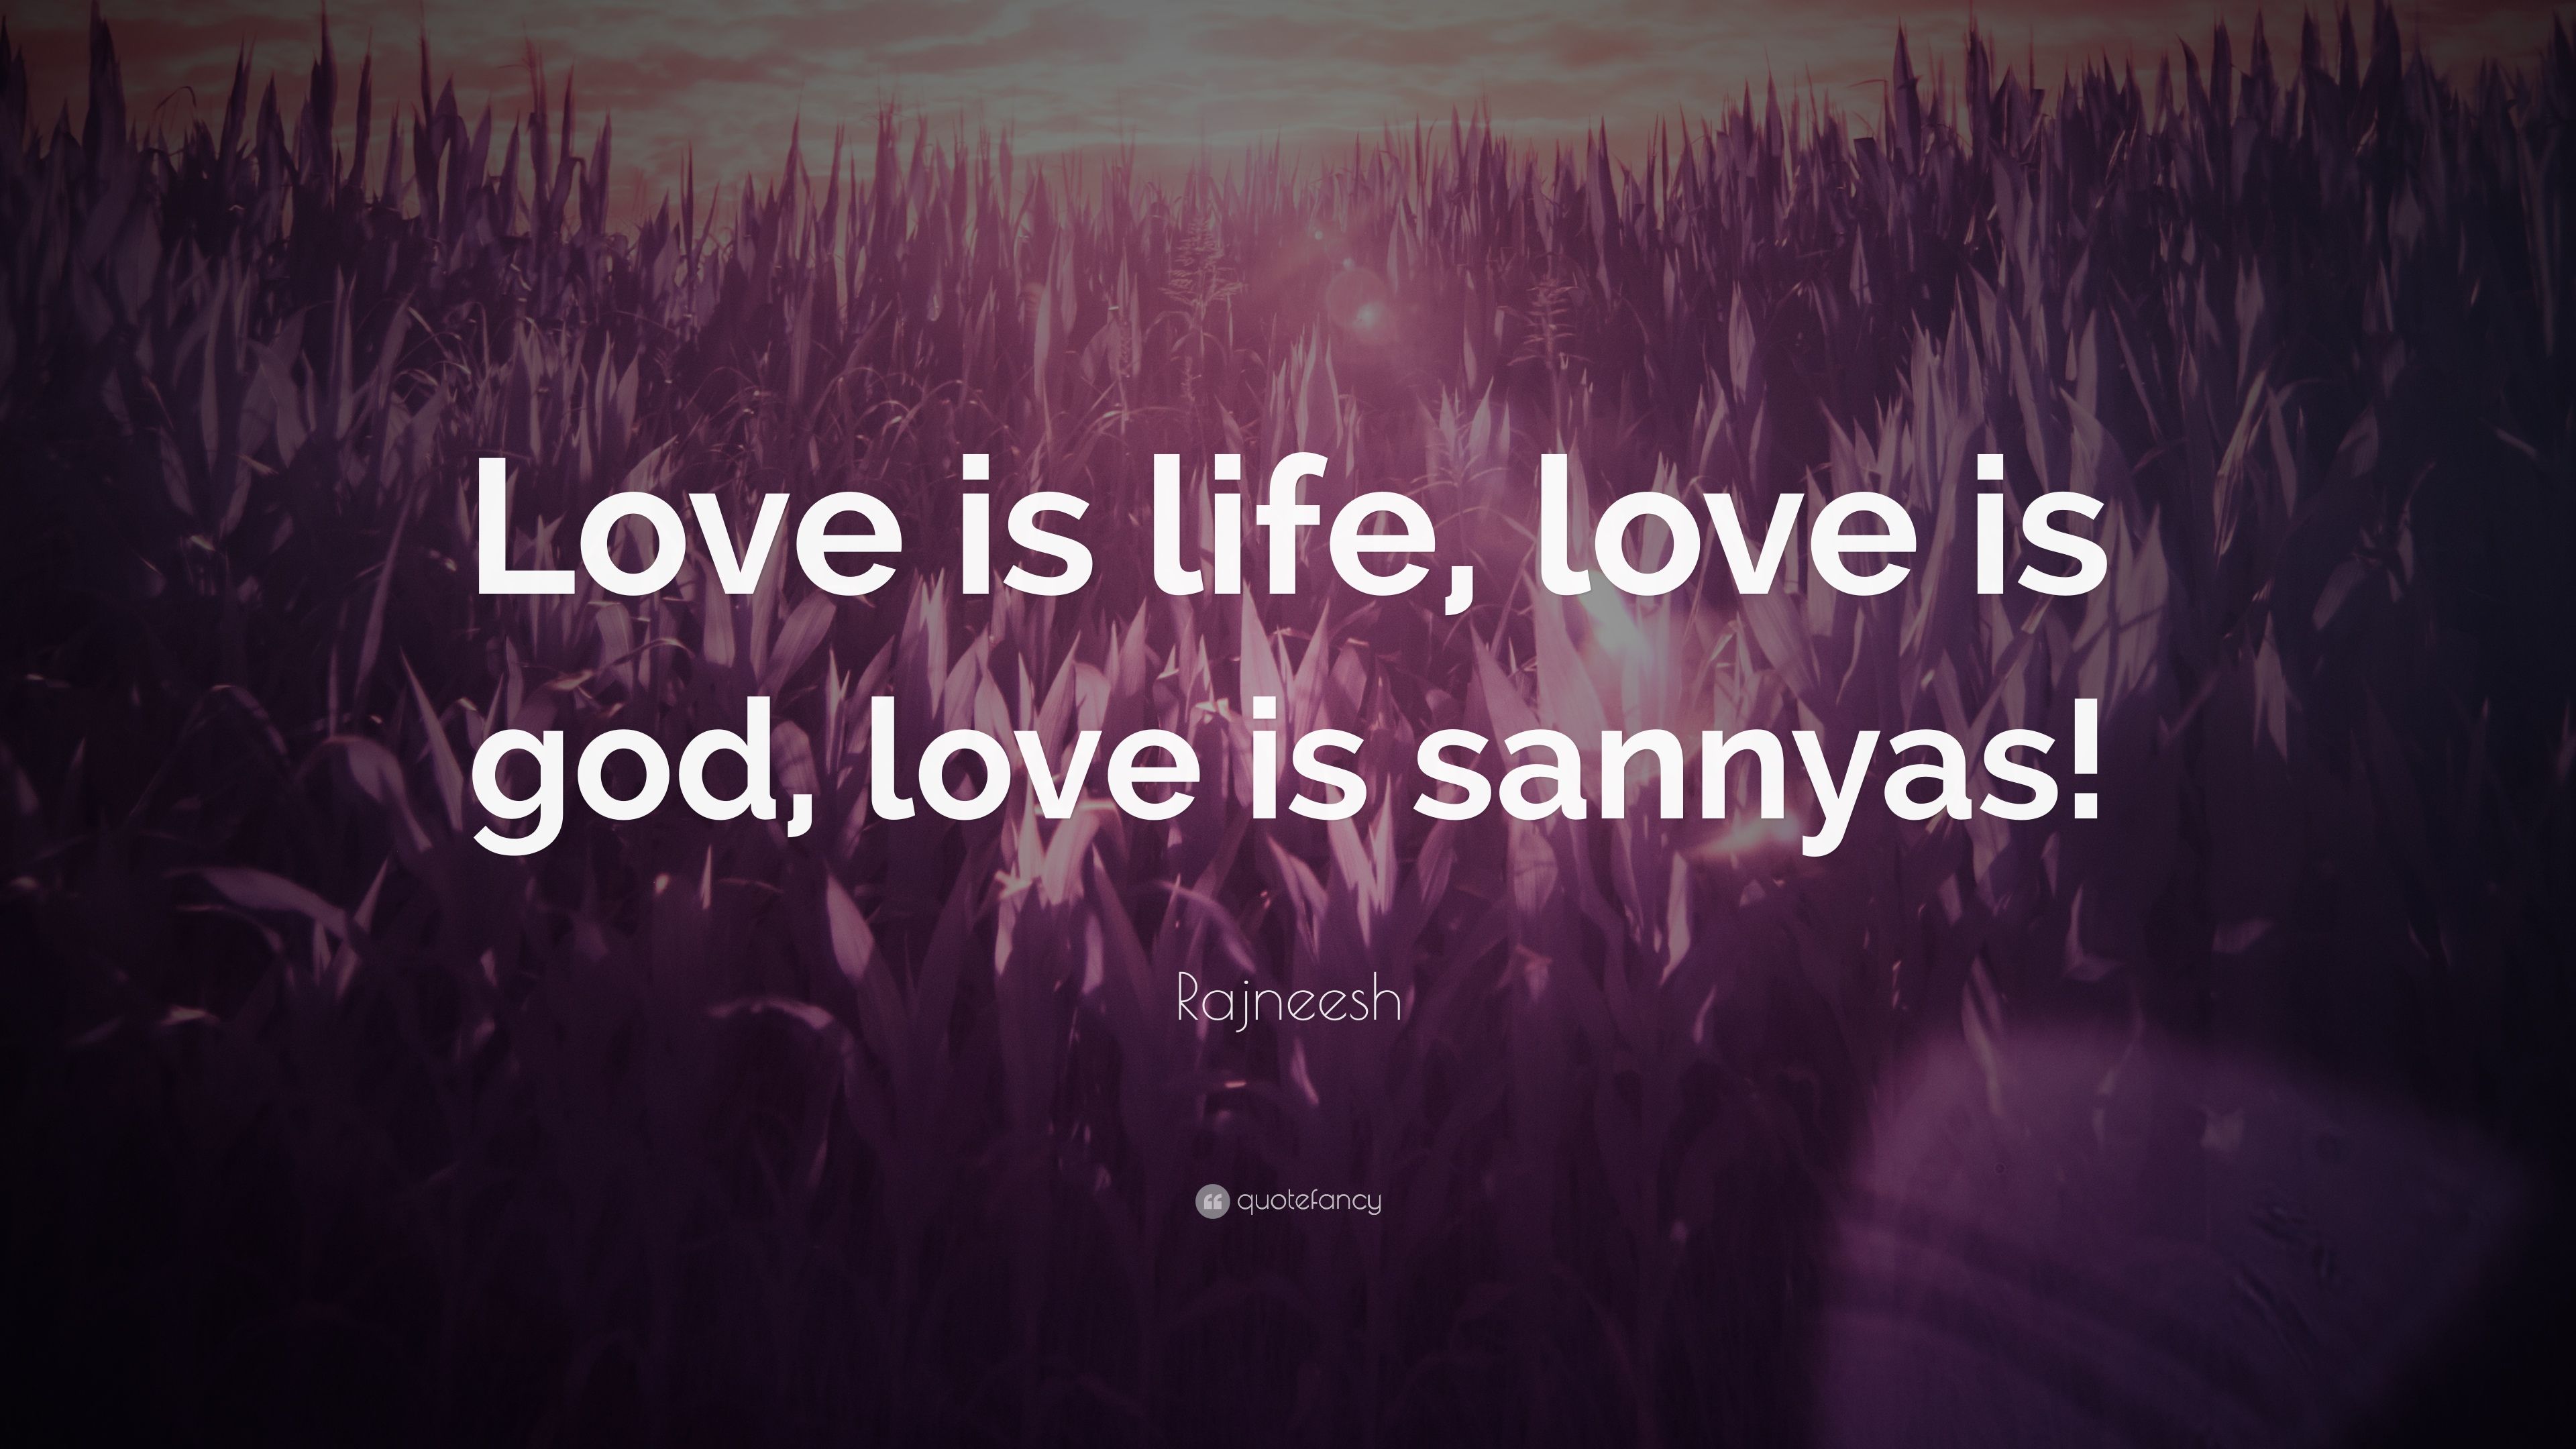 Rajneesh Quote: “Love is life, love is .quotefancy.com